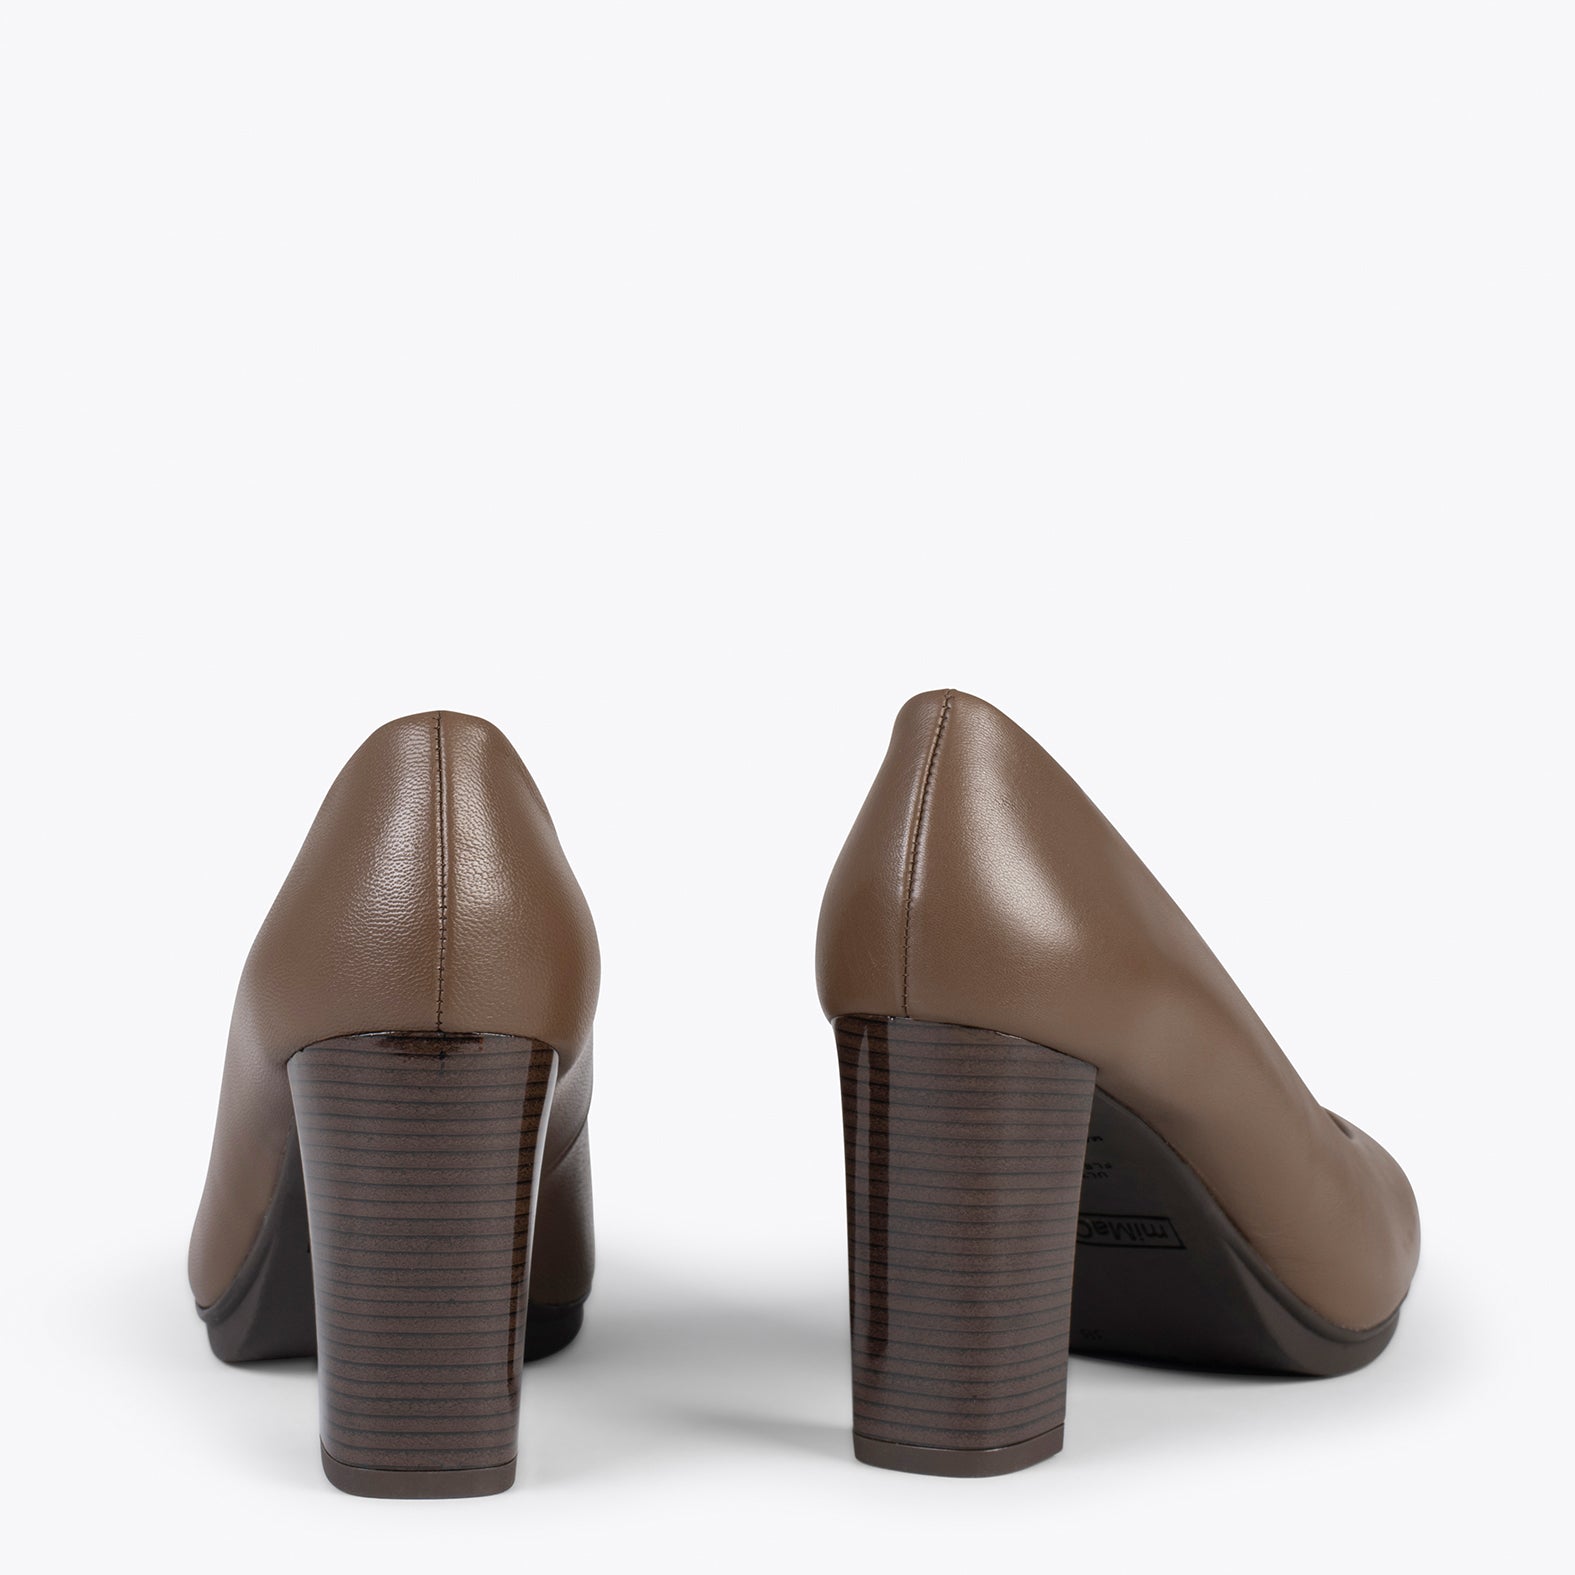 URBAN SHINE – BROWN nappa leather high heels